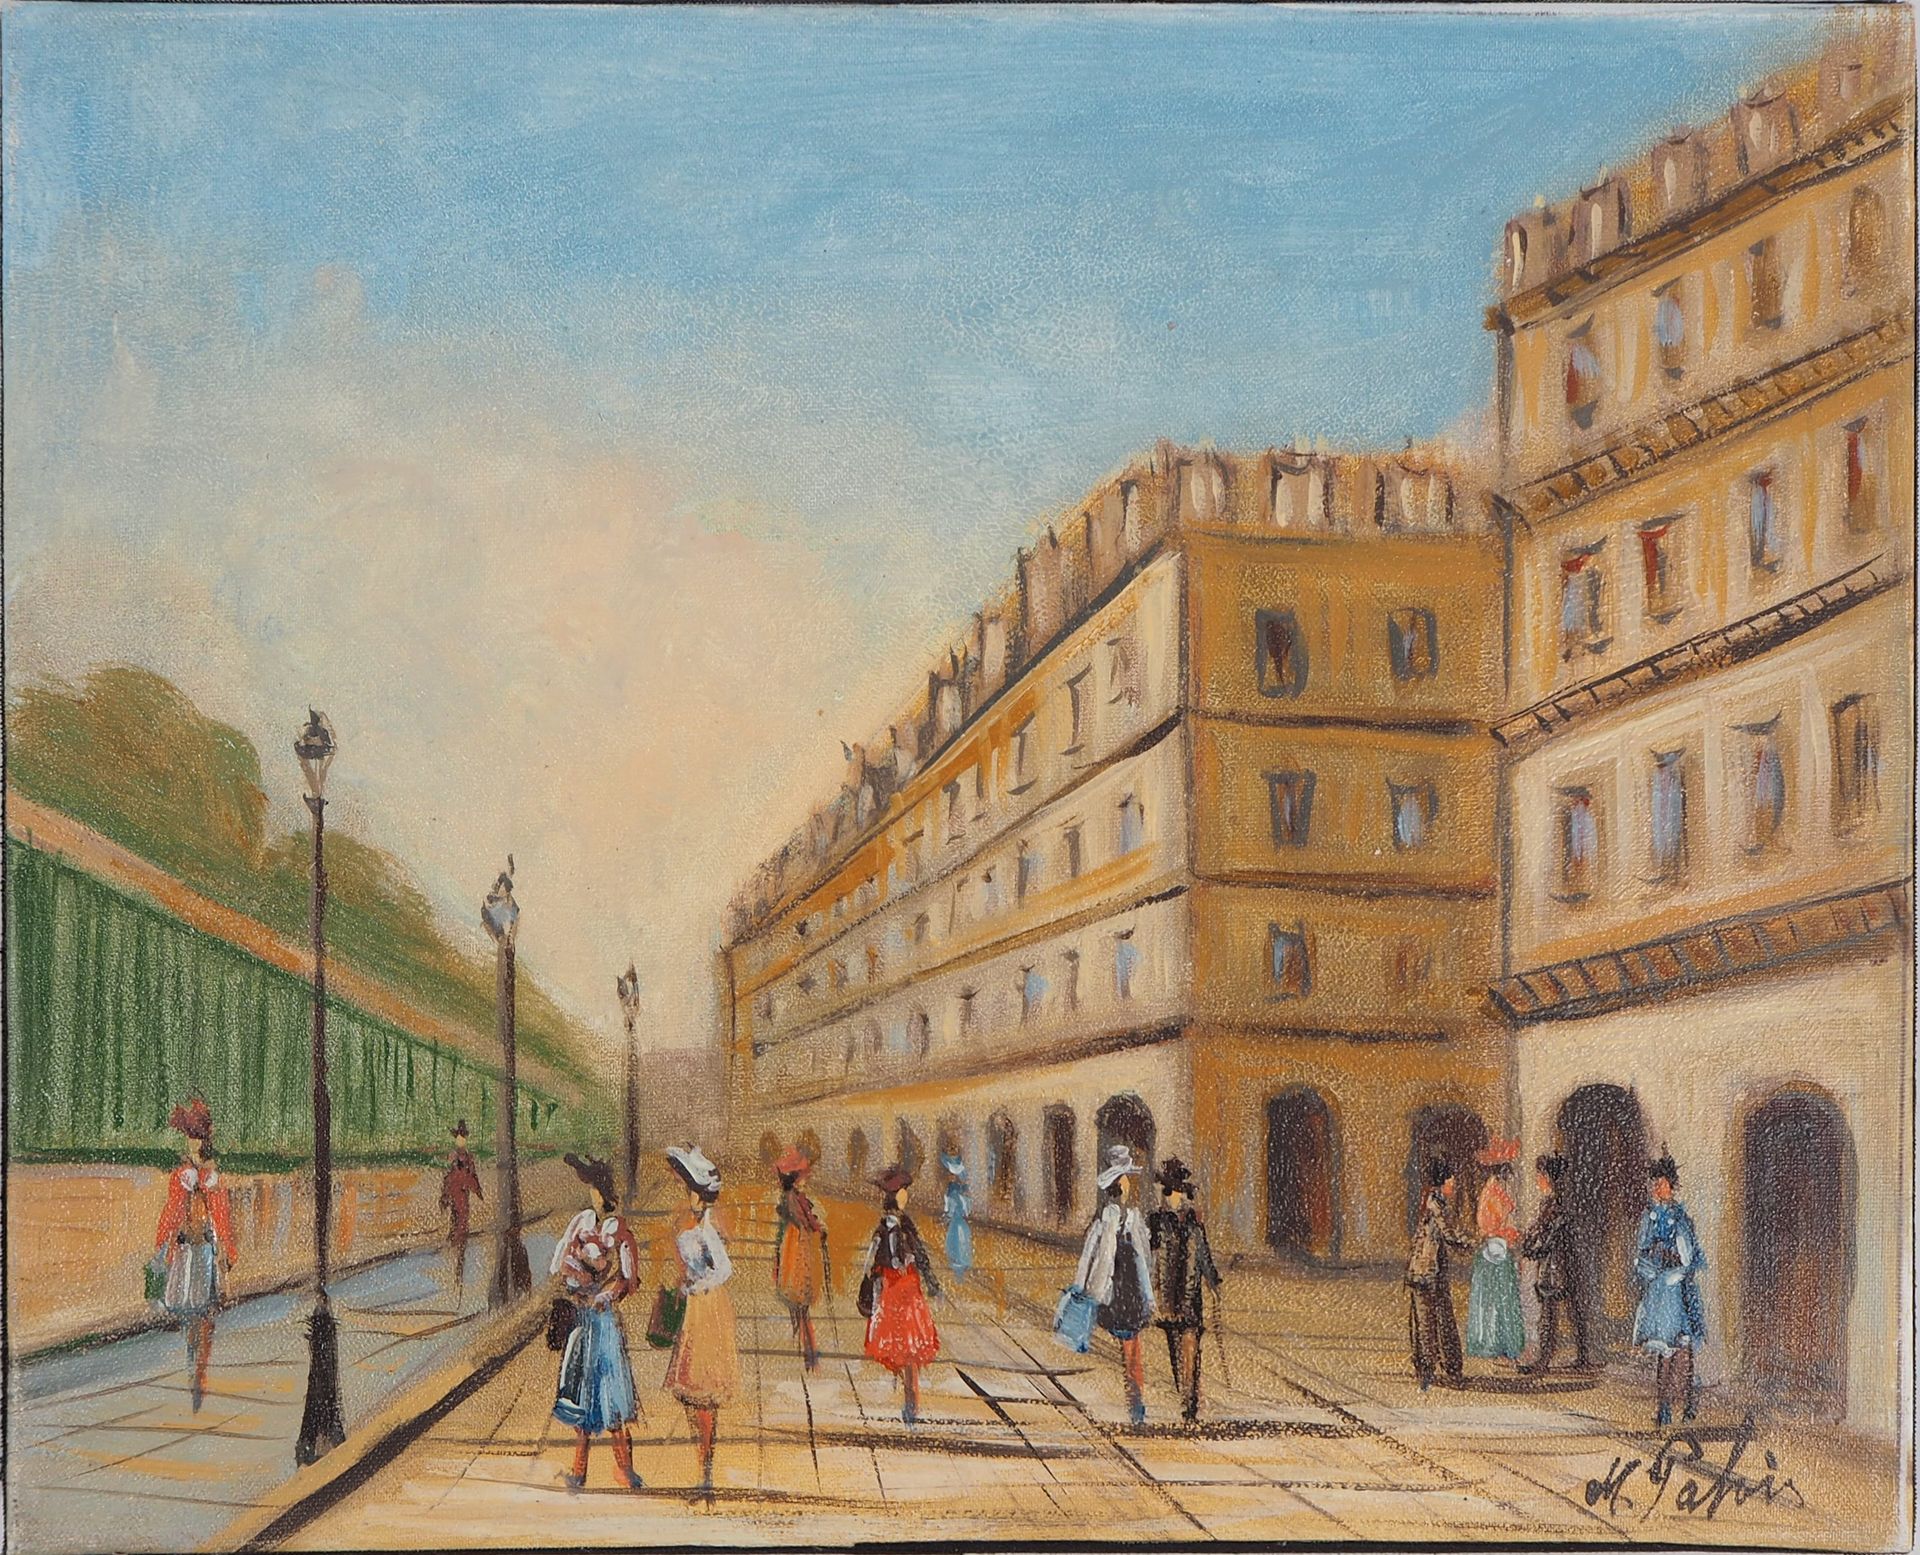 Michel Pabois 米歇尔-帕布瓦(1939)

里沃利街

布面油画

右下方有签名

背面有副署和标题

22 x 27 cm

状况极佳



拍&hellip;